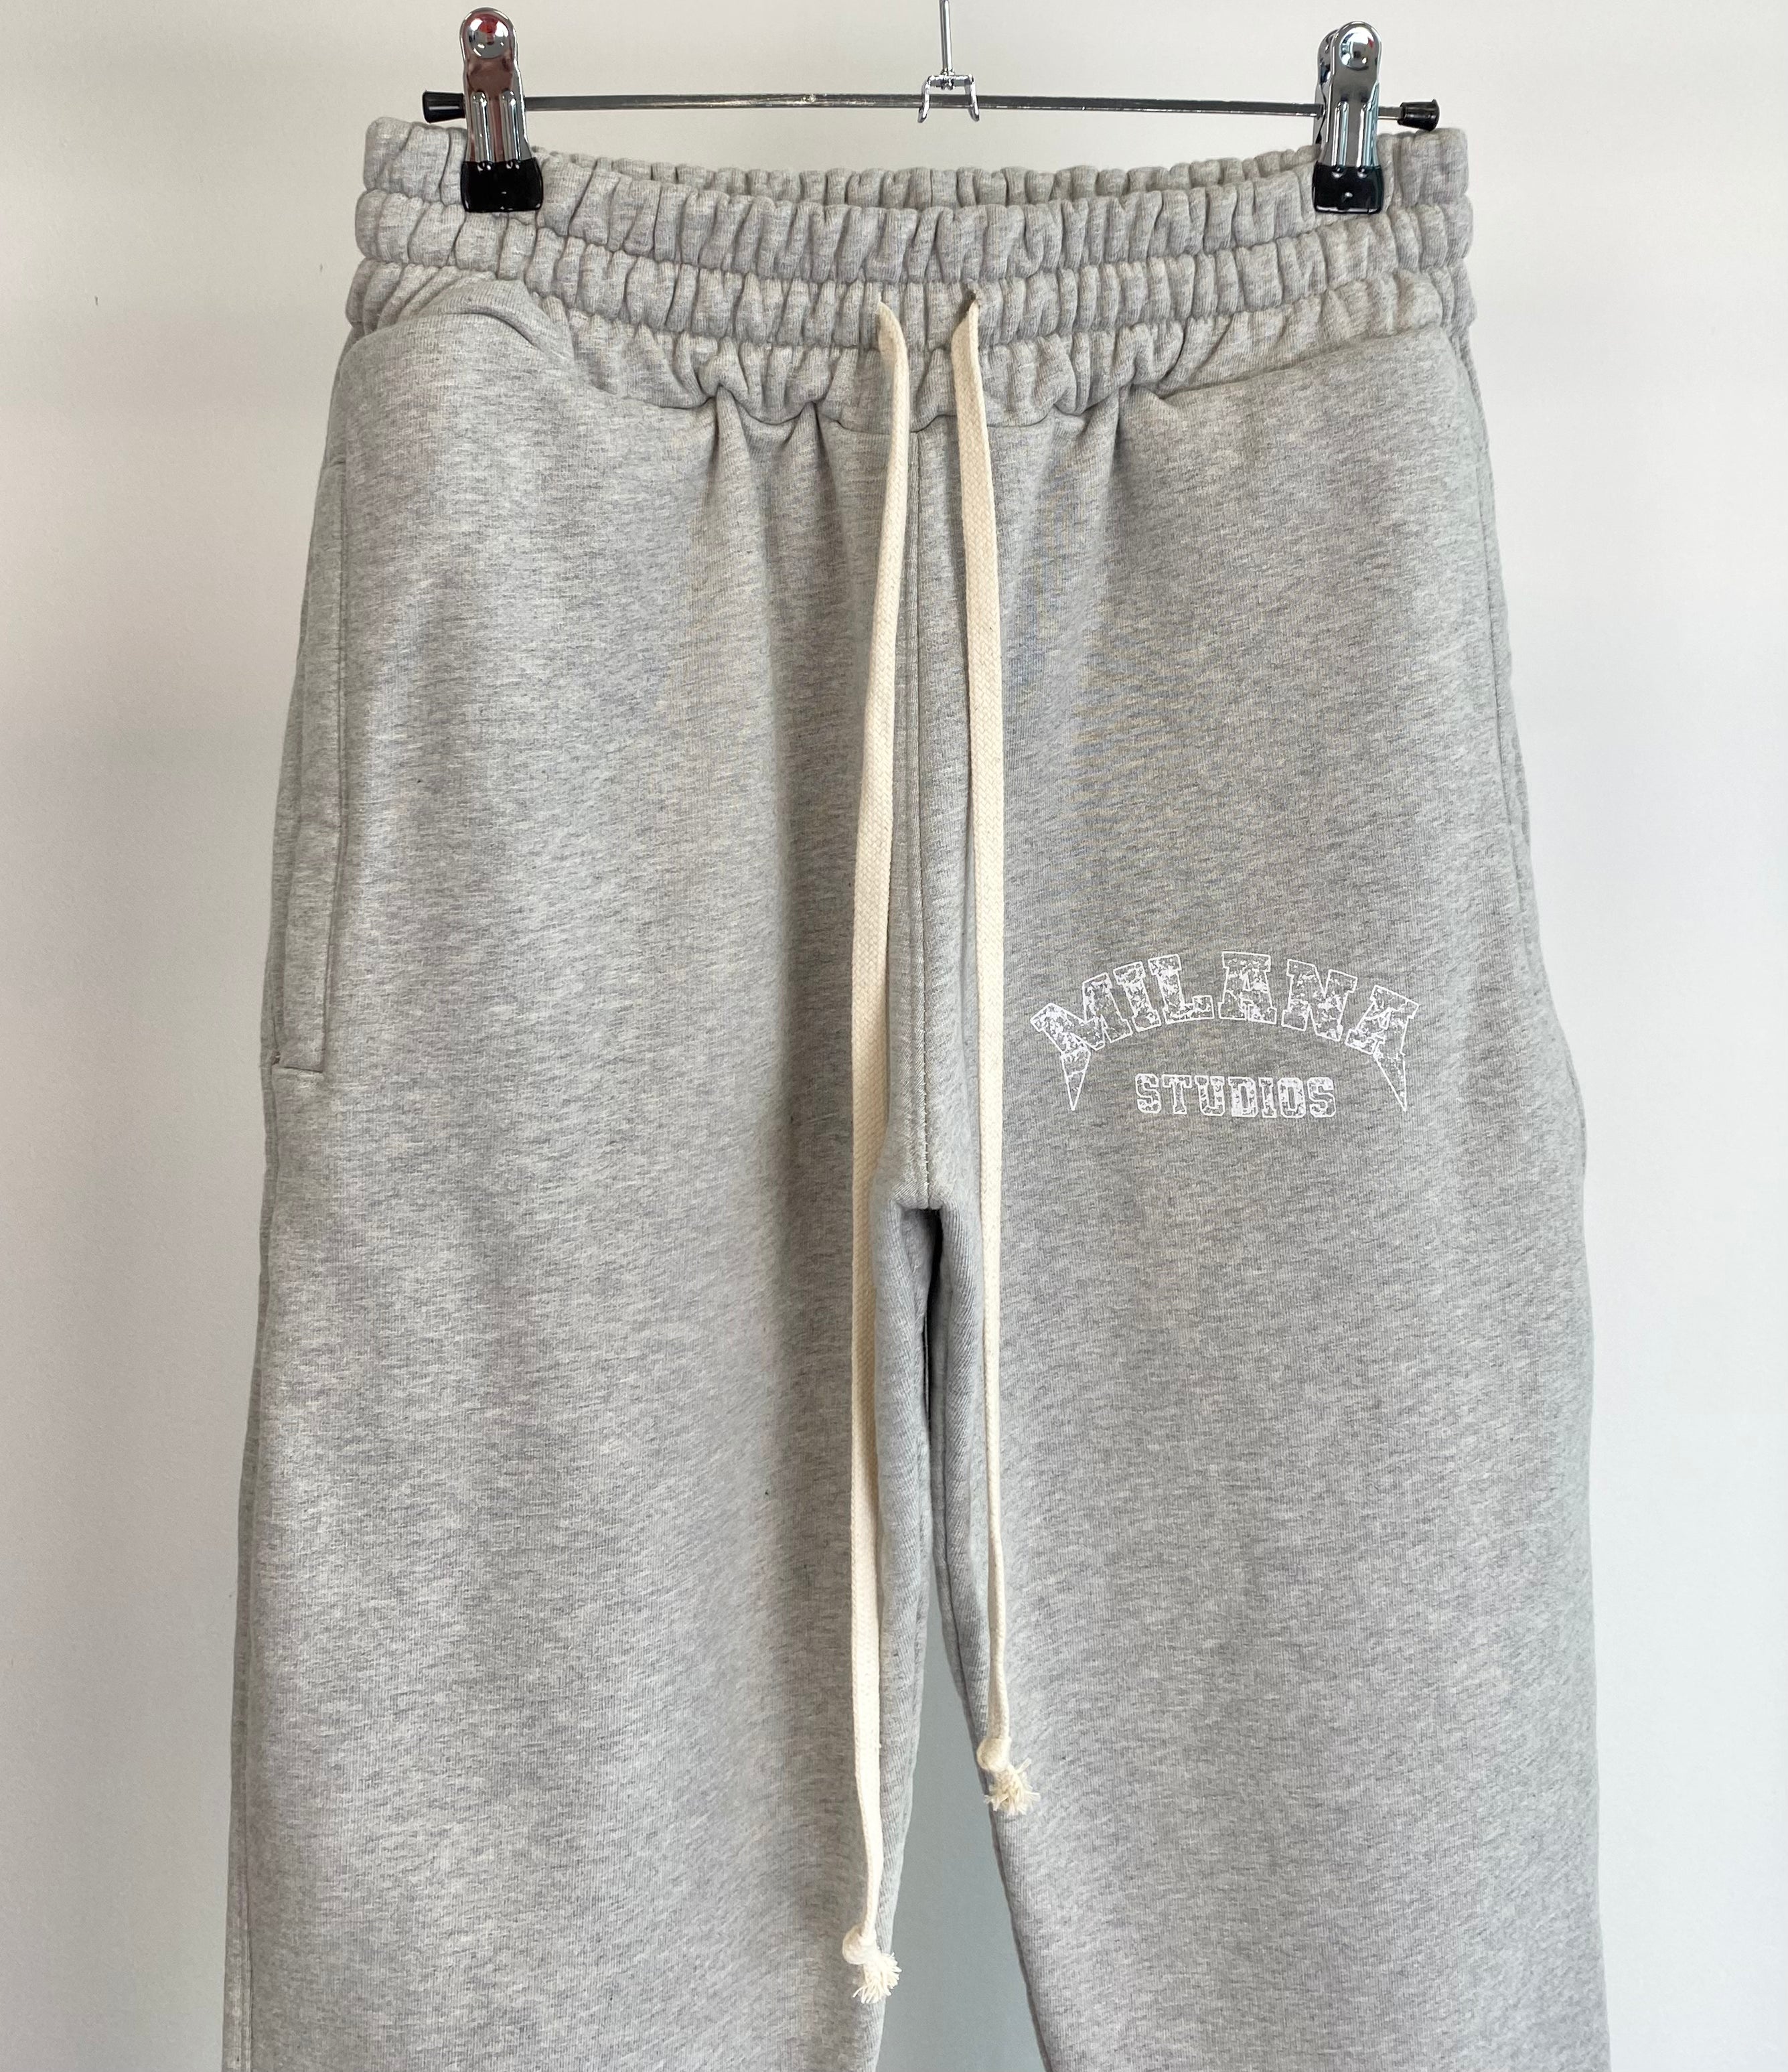 Marl Grey Arched Sweatpants.